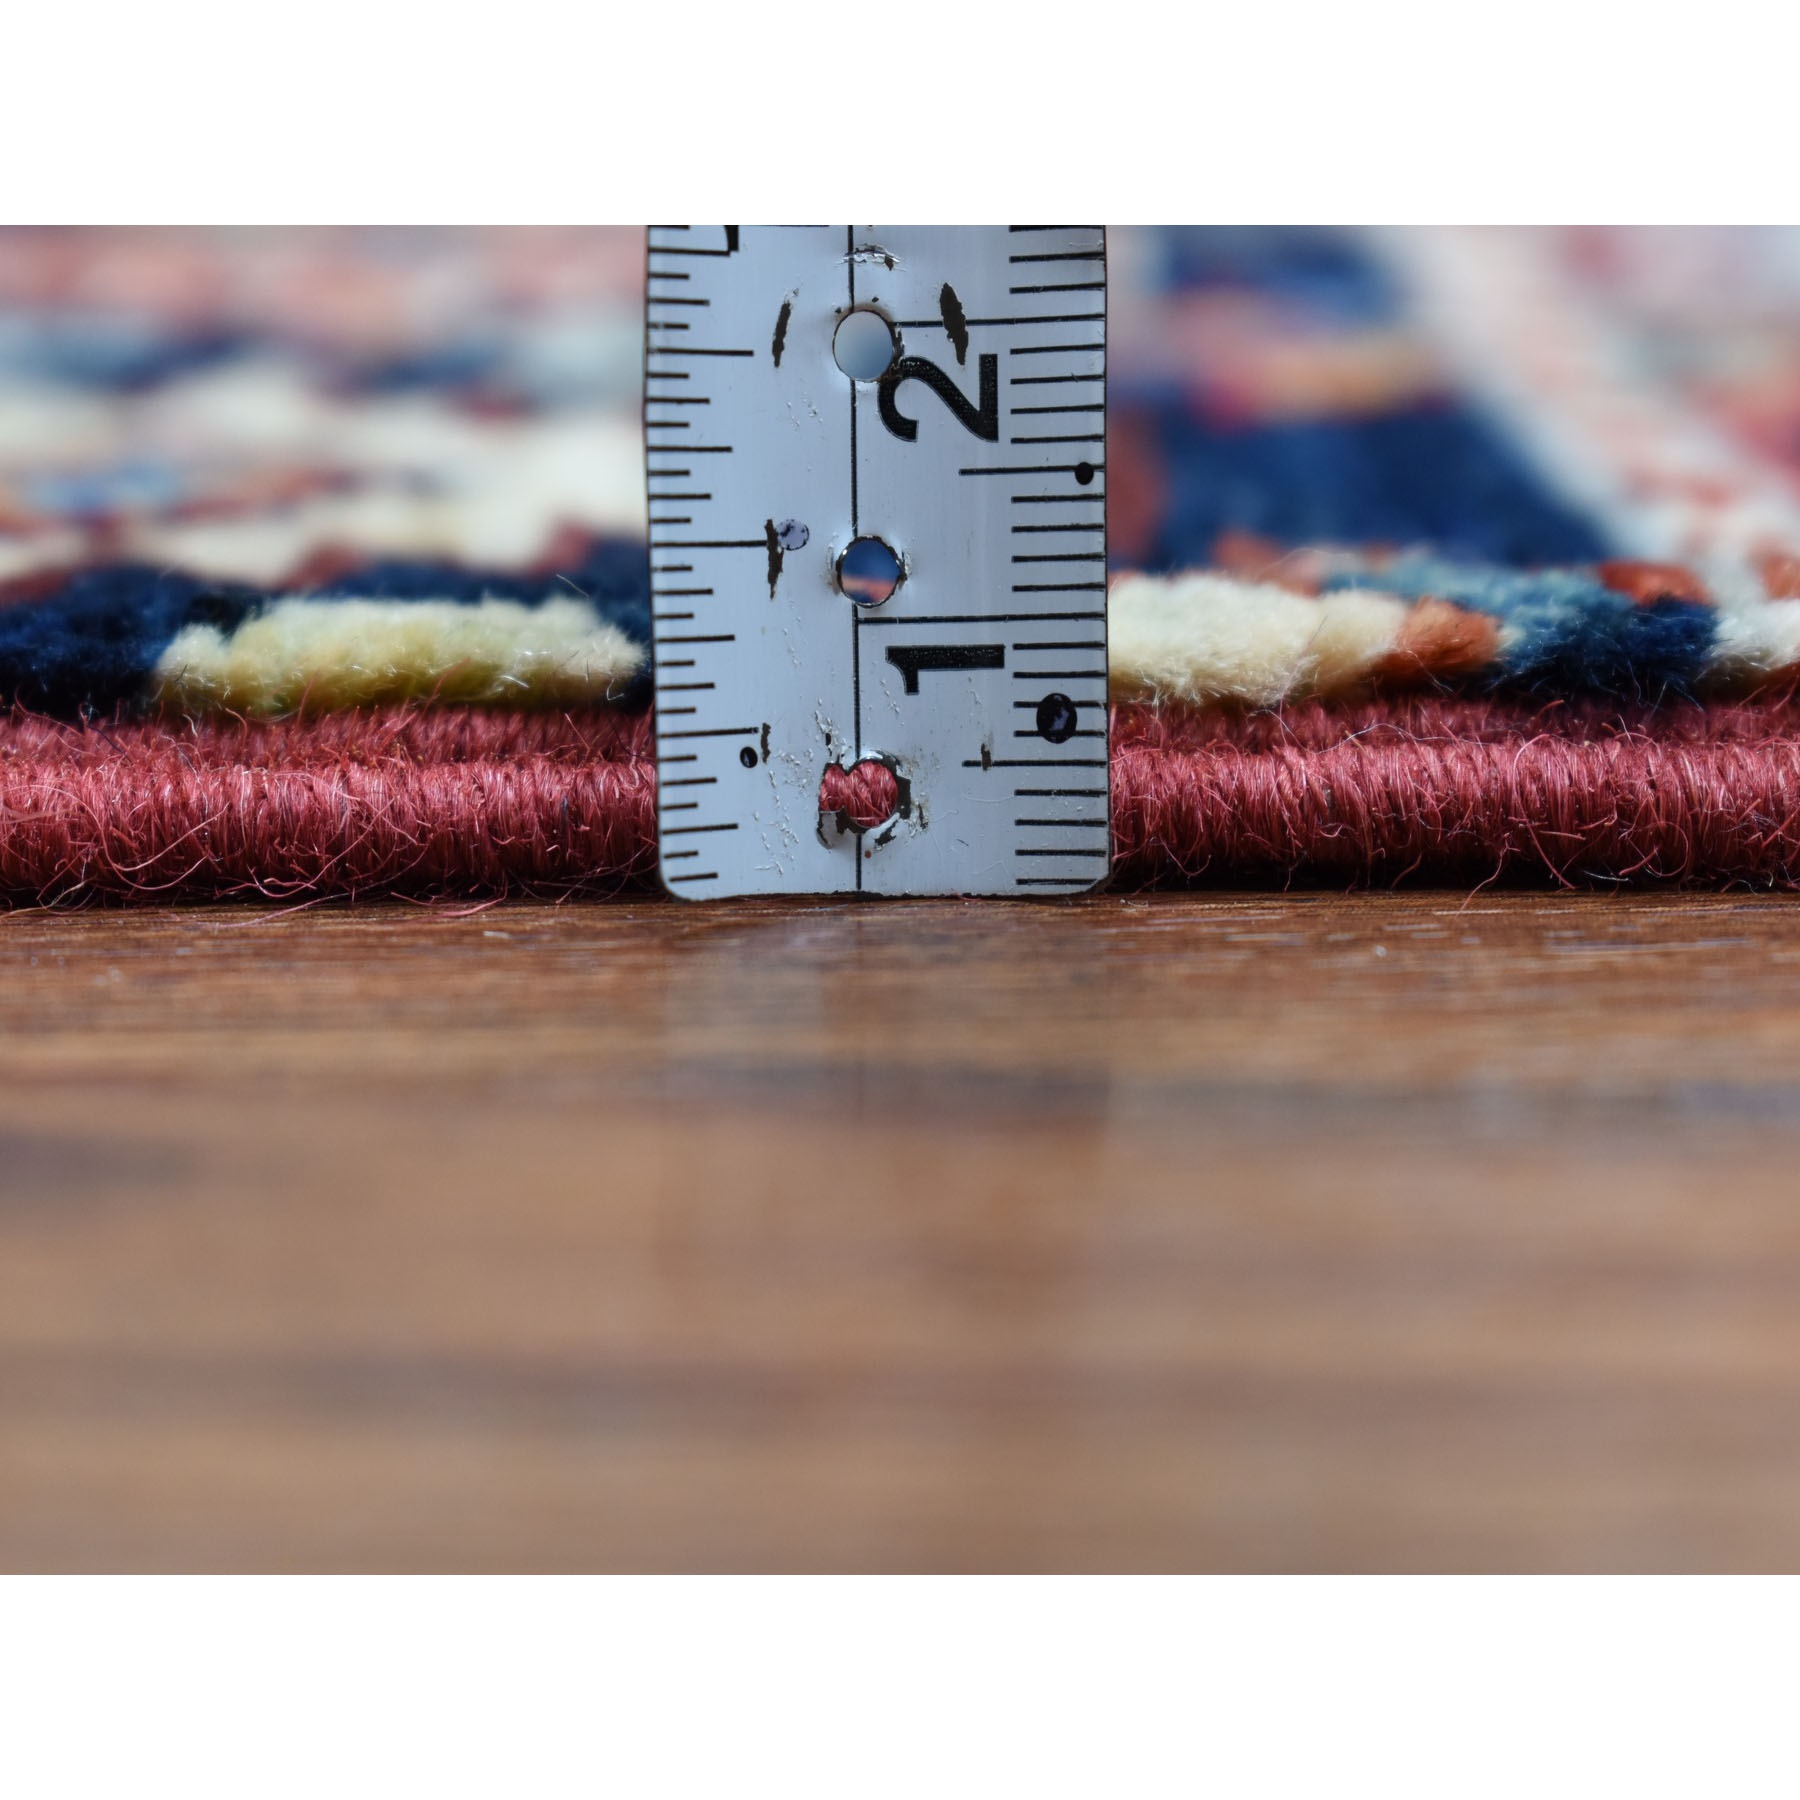 8-1 x10-10  Khorjin Design Colorful Super Kazak Pure Wool Hand Knotted Oriental Rug 